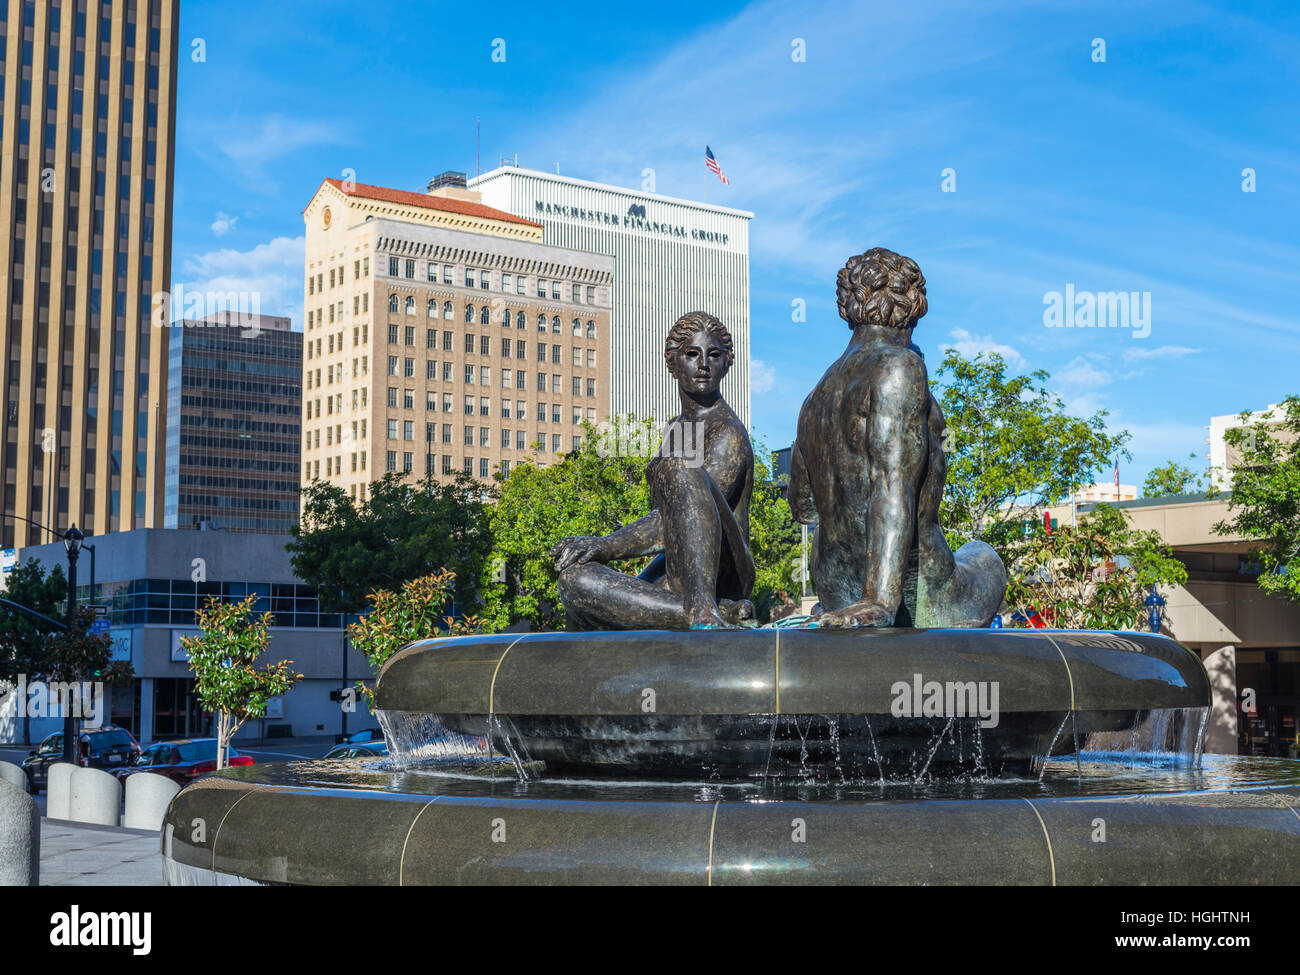 Fontana dei due oceani scultura e fontana nel centro cittadino di San Diego, California, USA. Foto Stock